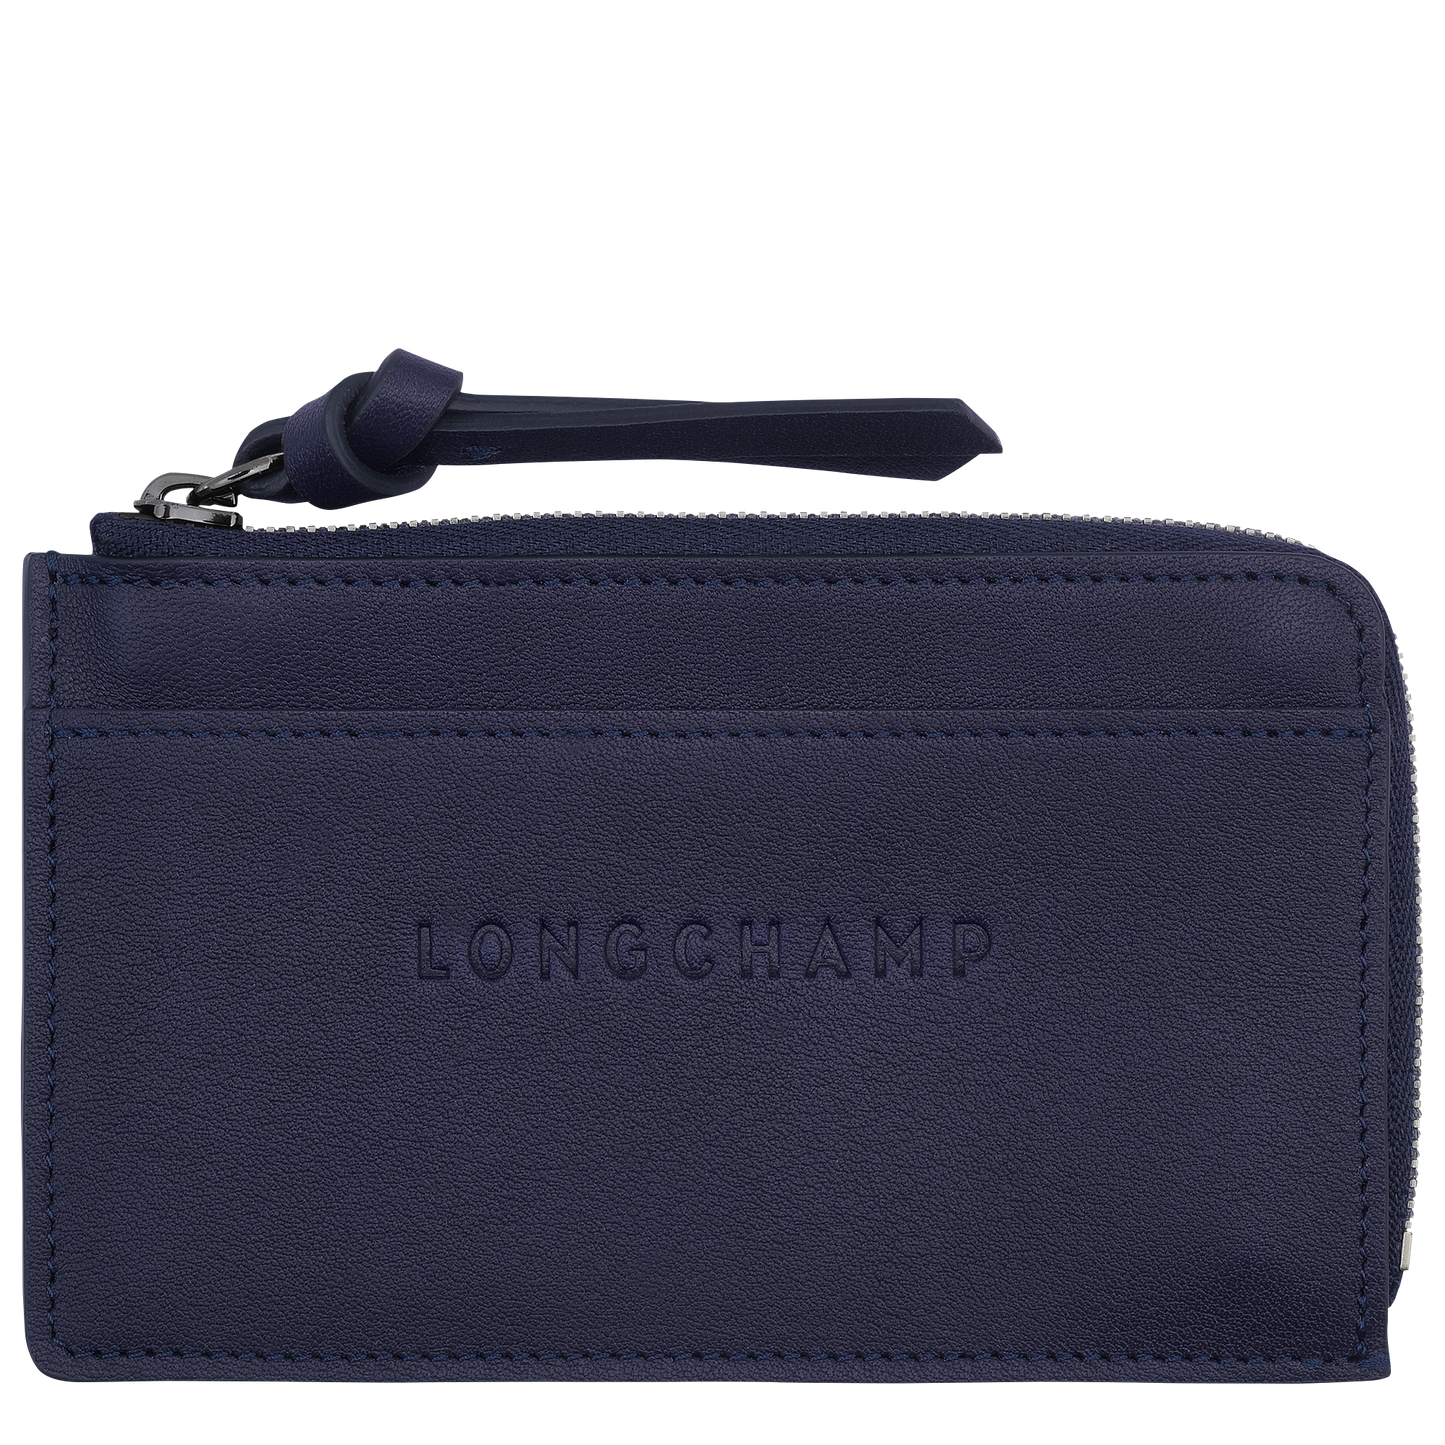 Longchamp 3D Card holder